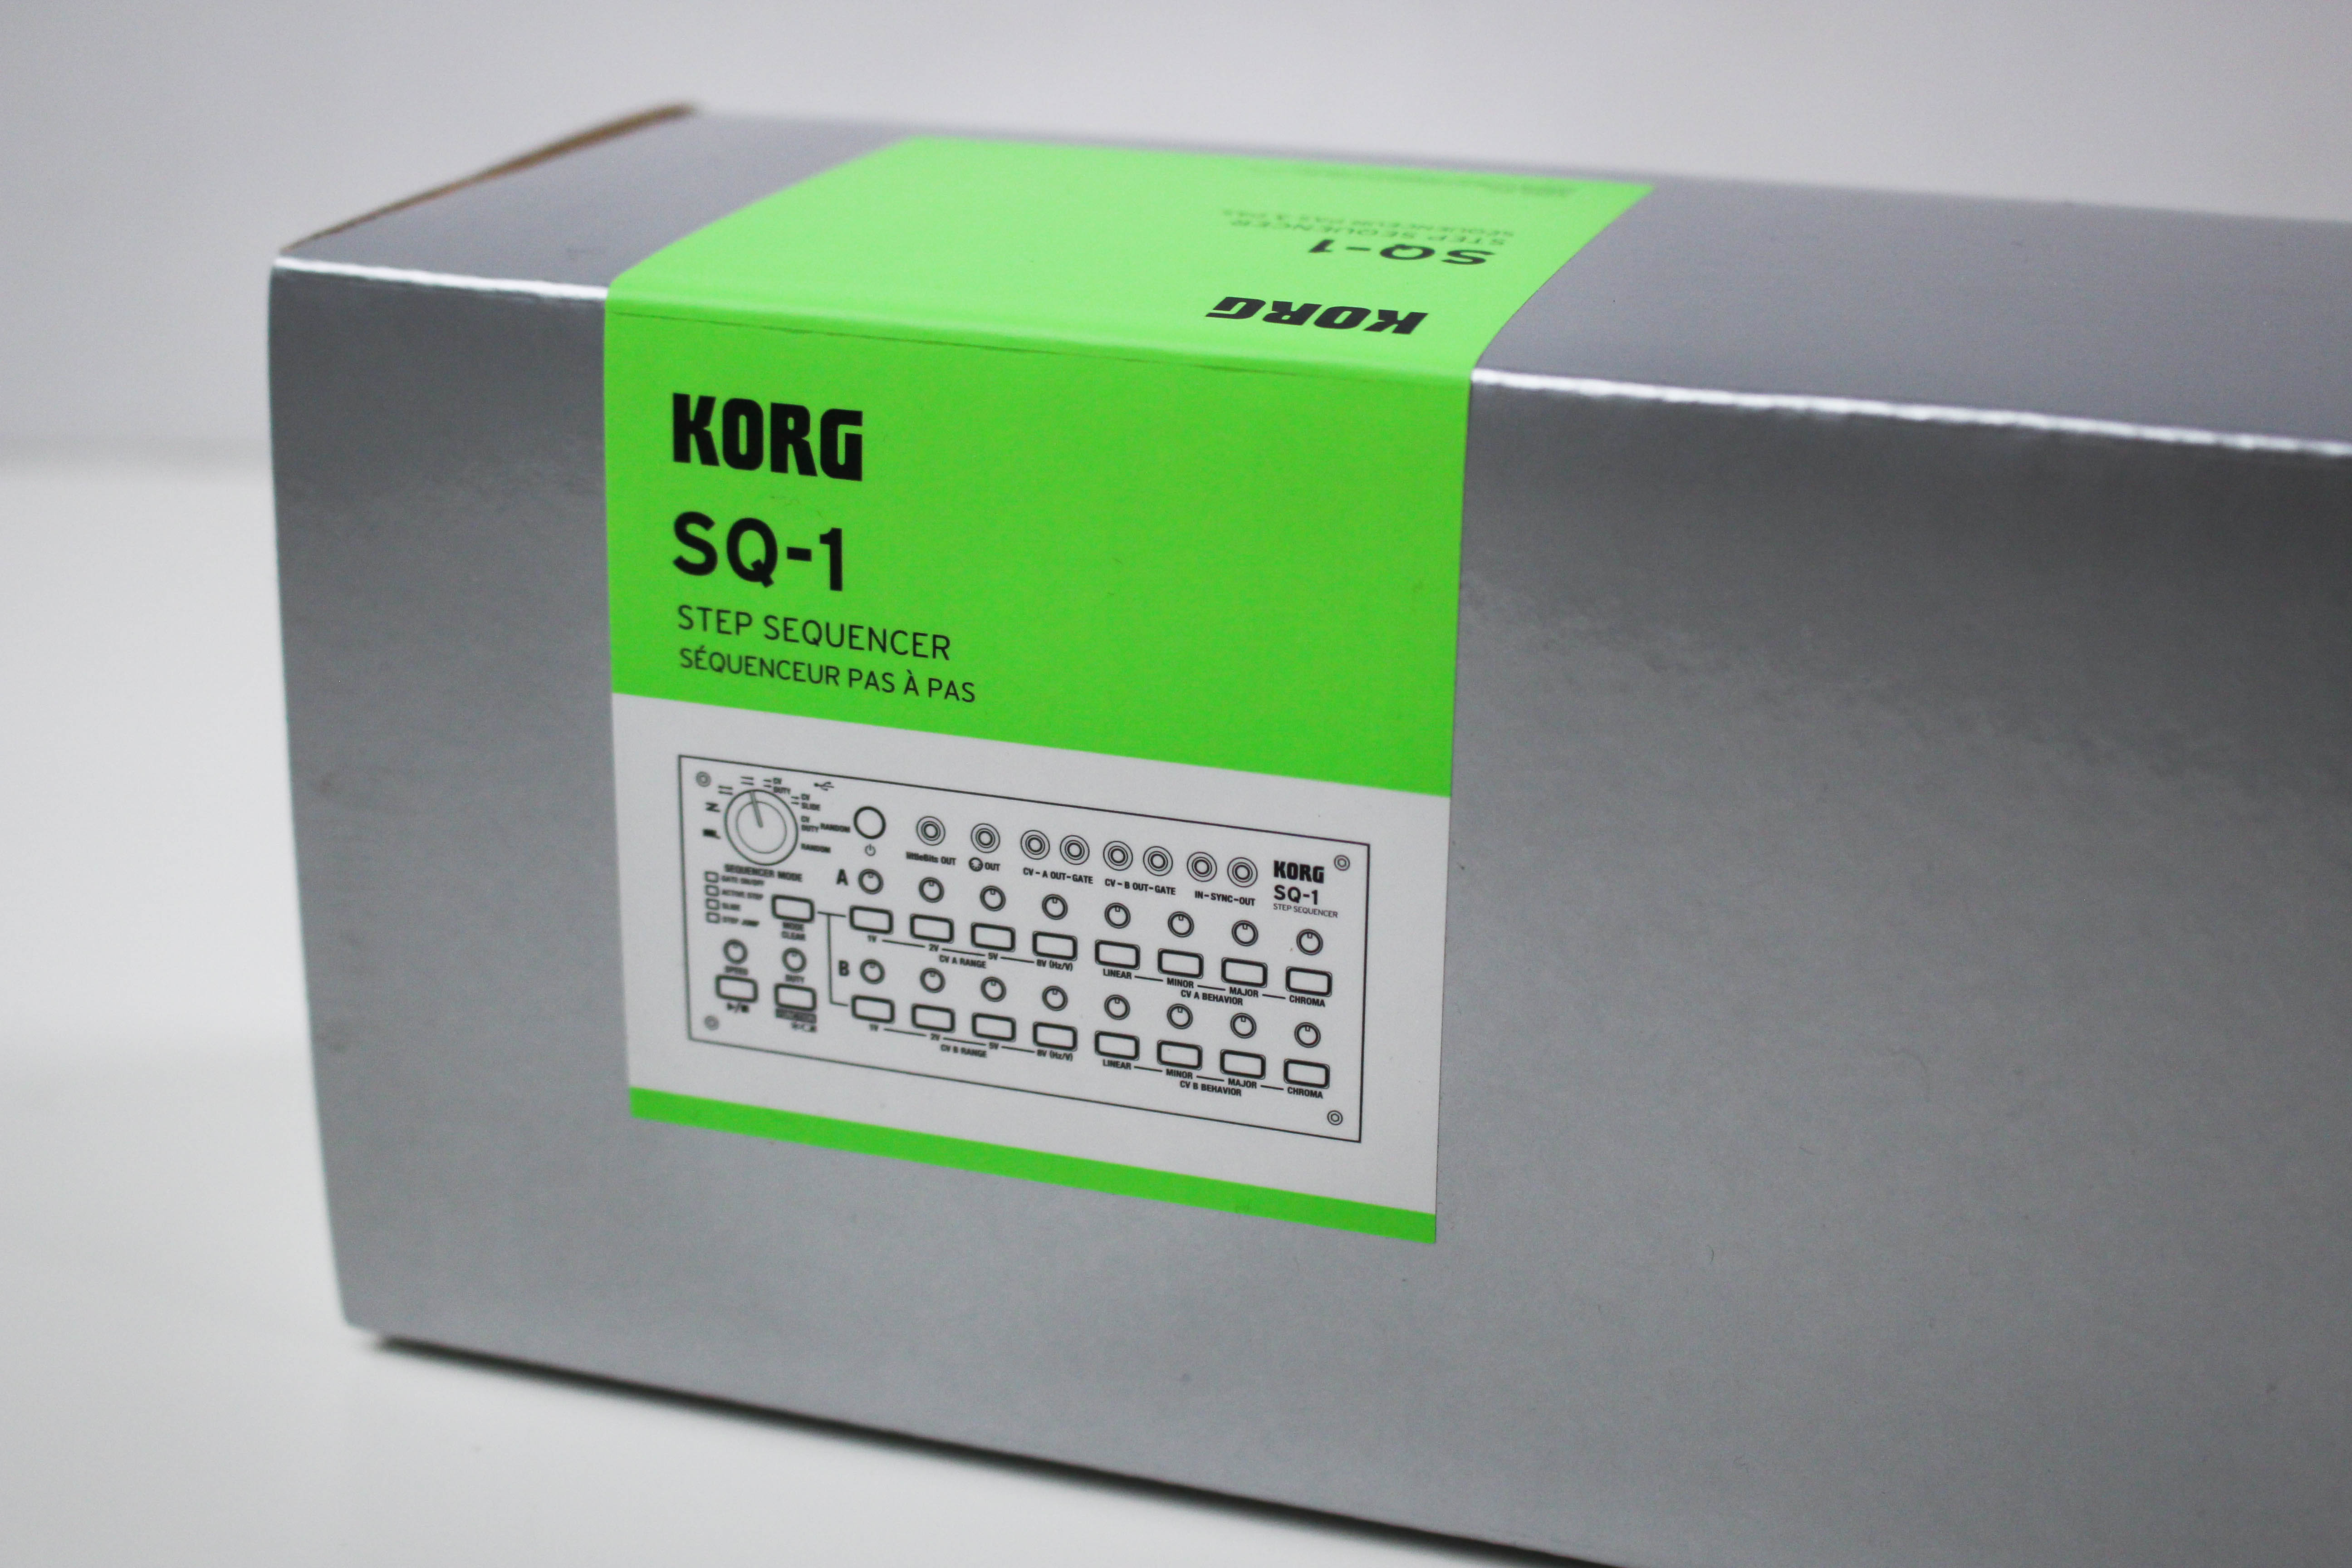 Korg SQ-1 sequencer